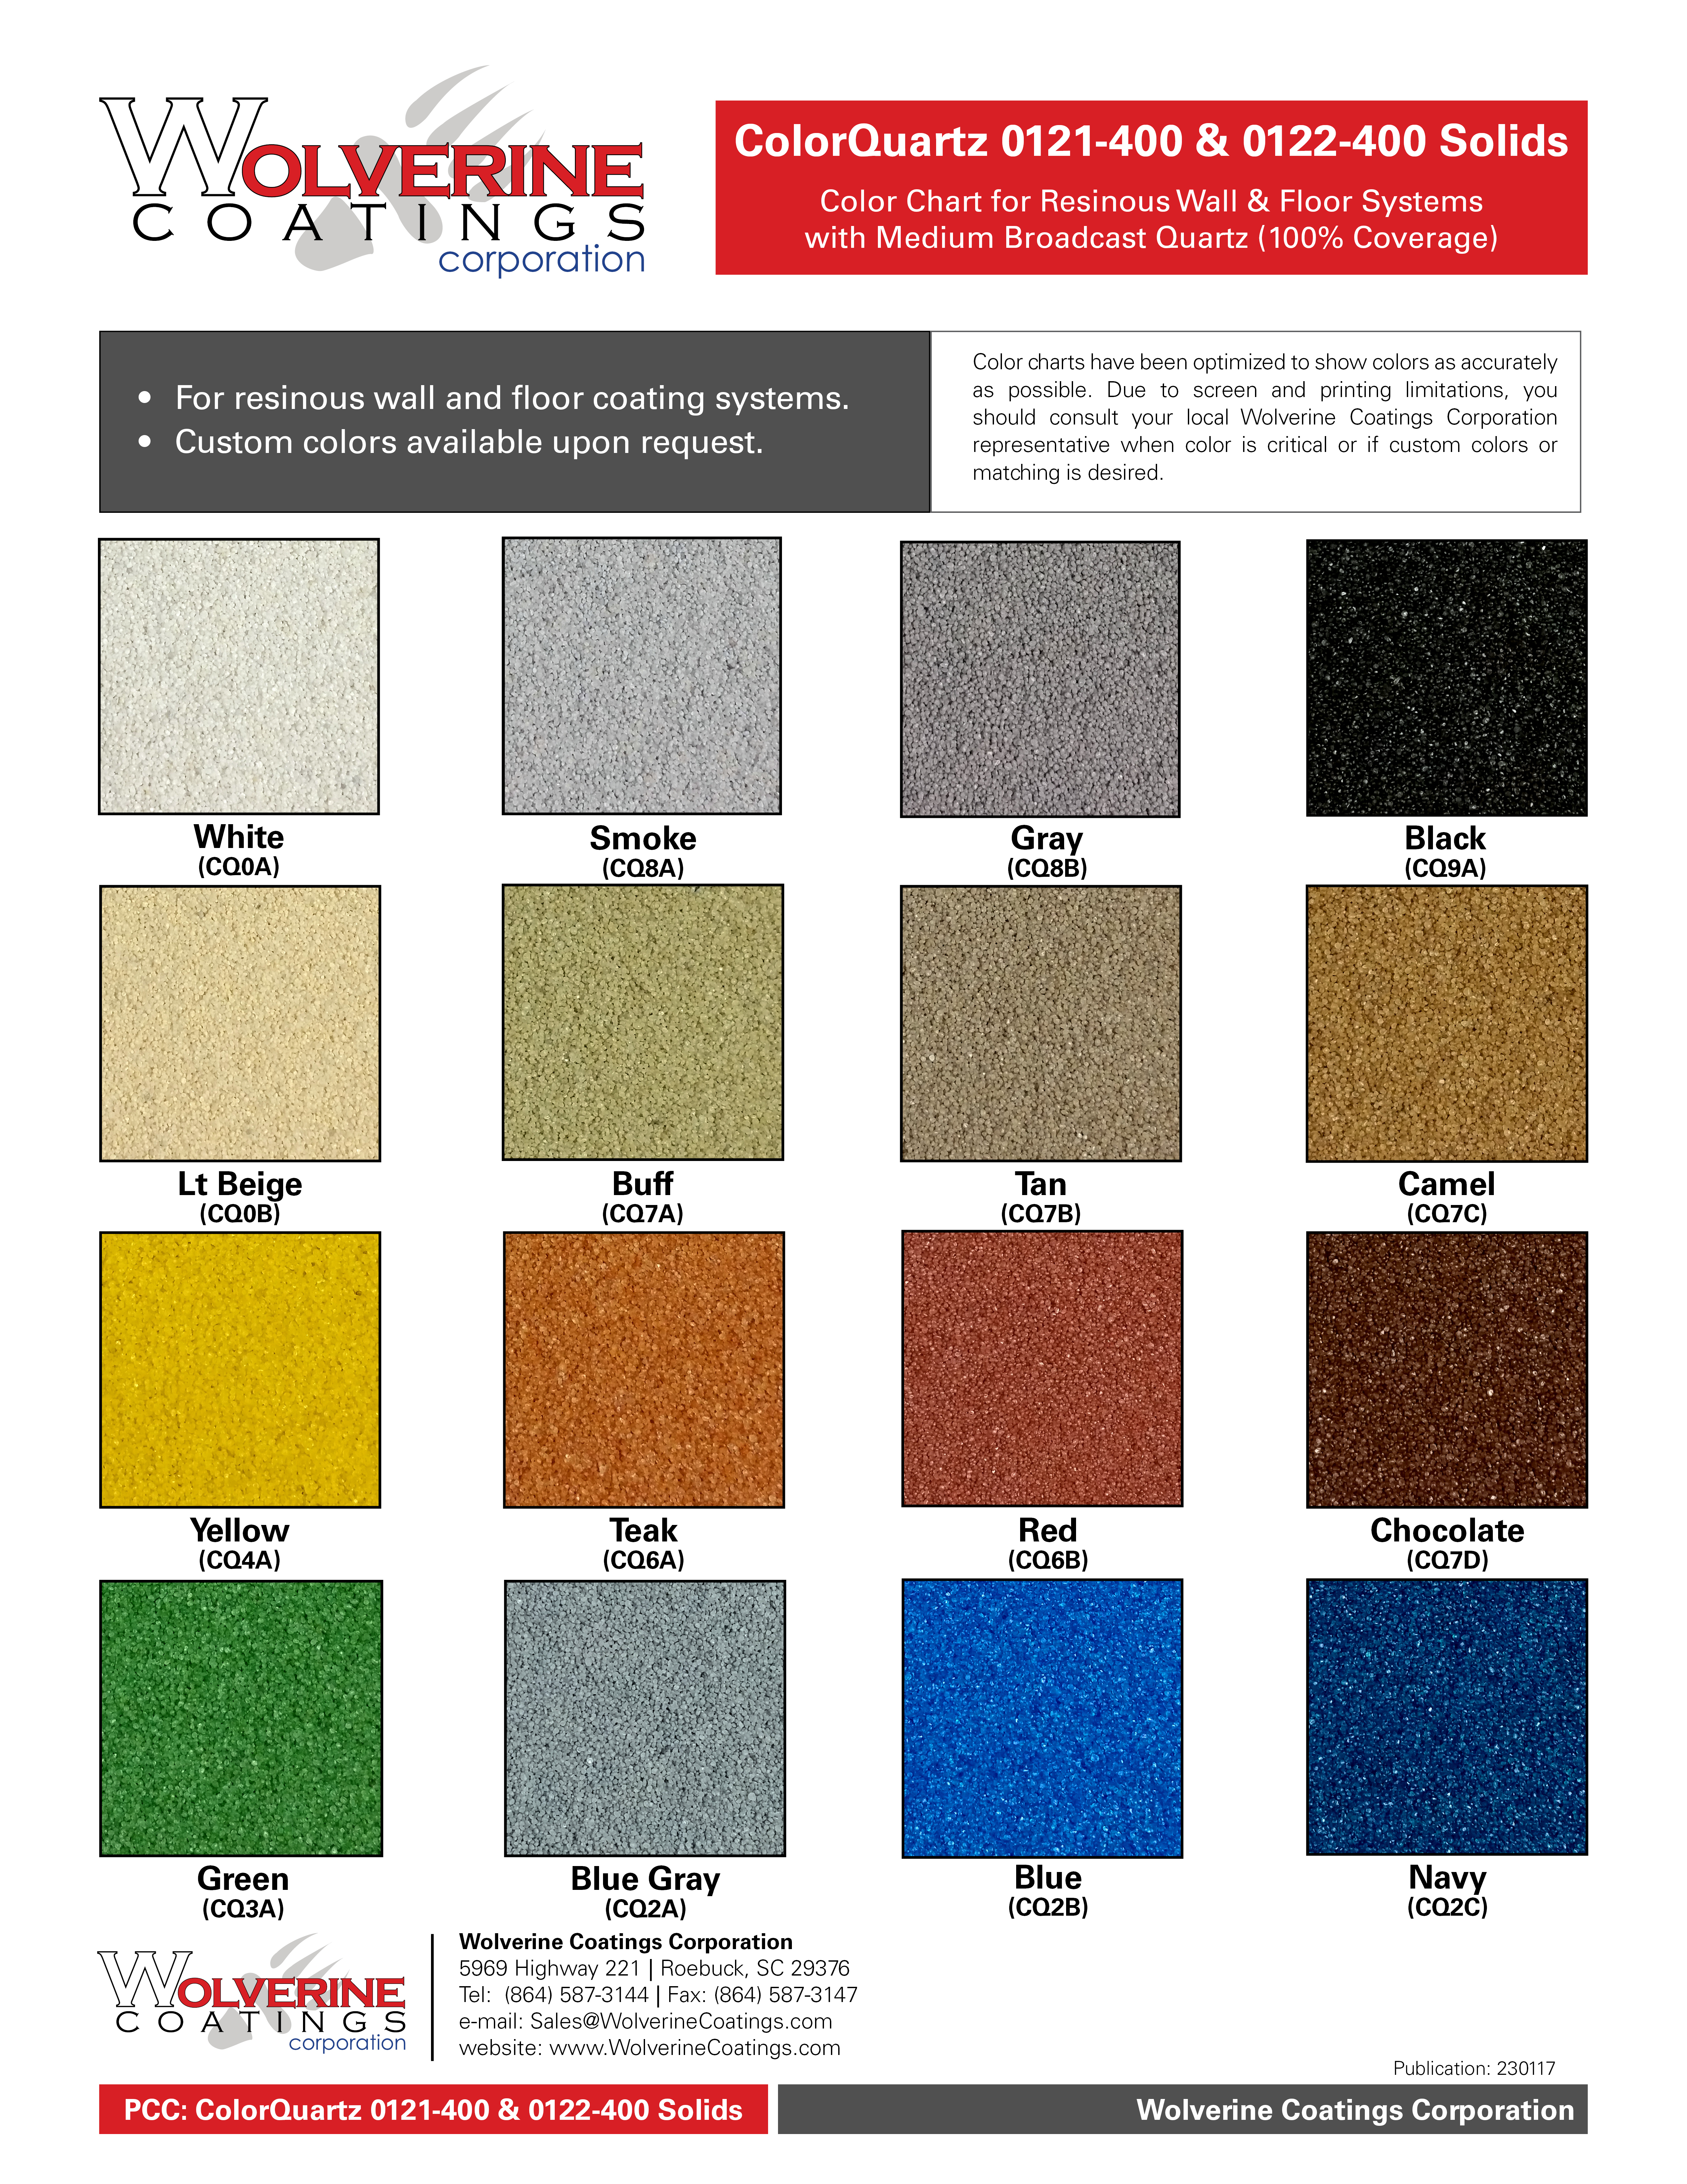 ColorQuartz 0121-400 Solids Color Chart - Product Color Charts